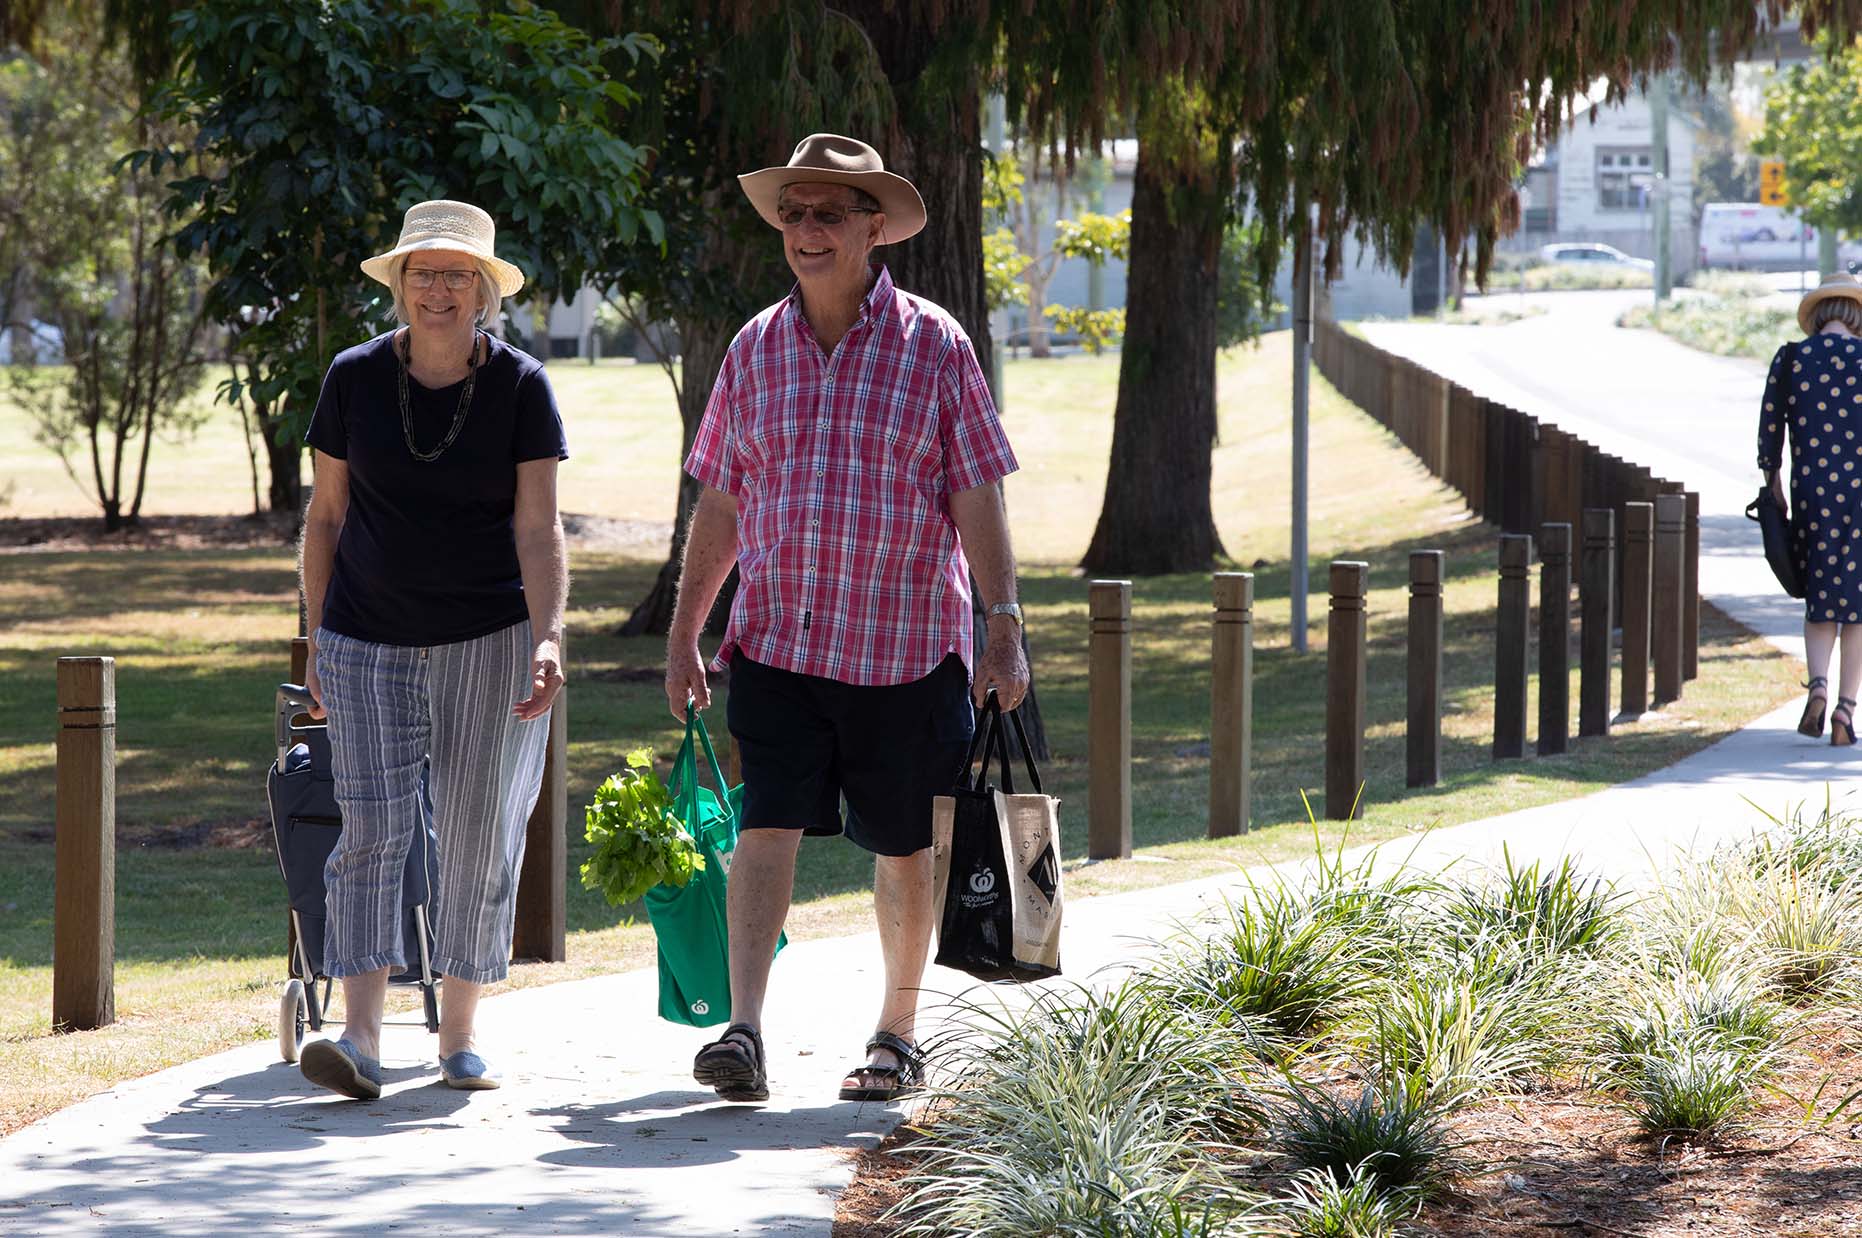 An elderly couple walking down a path carrying shopping bags